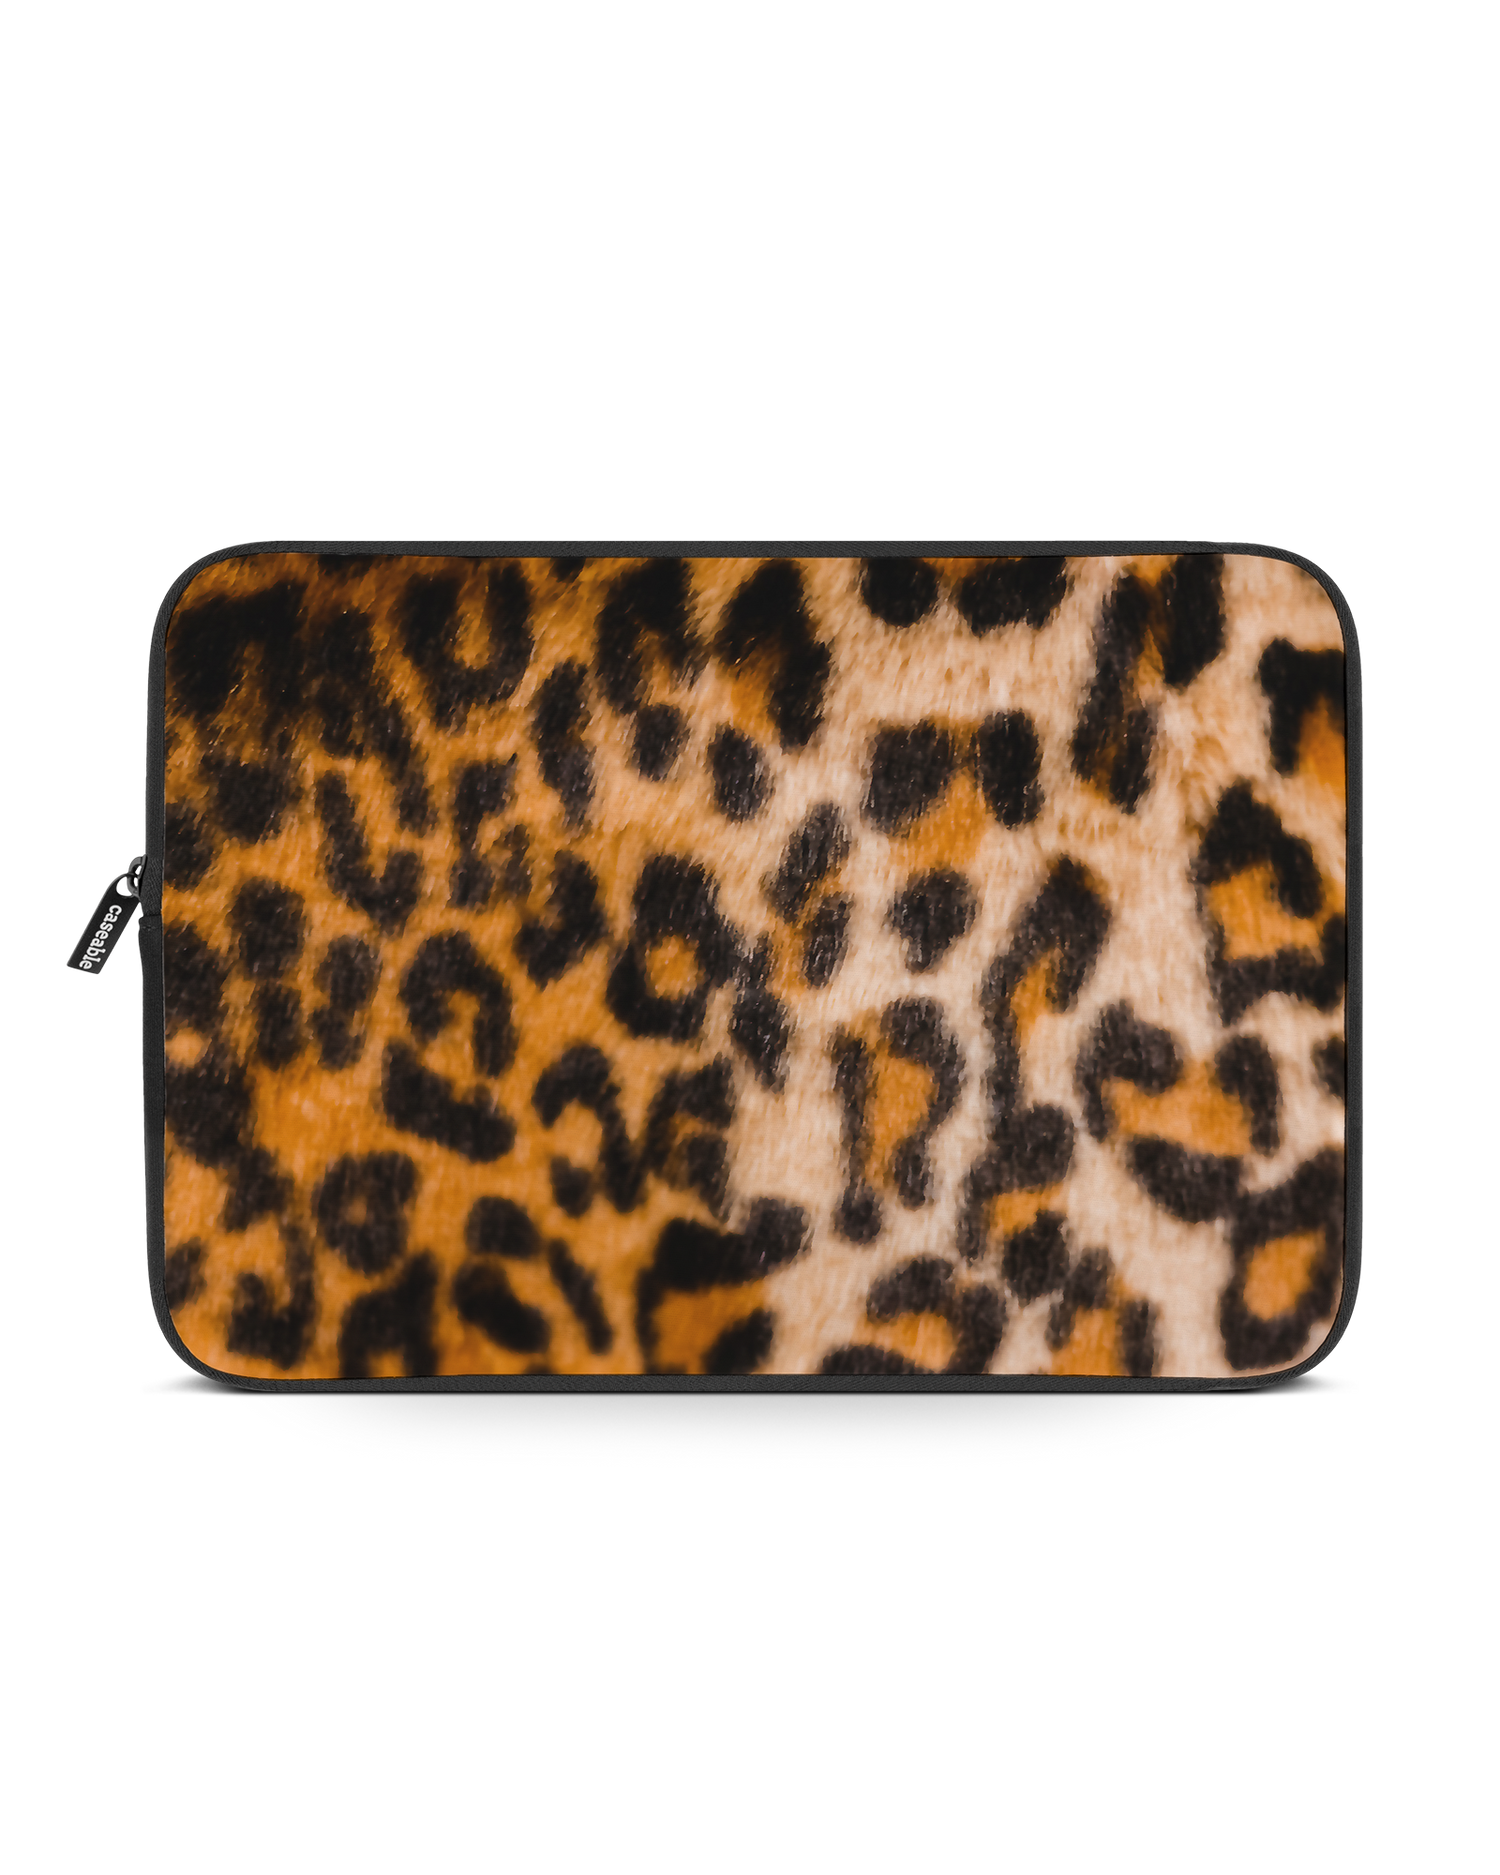 Leopard Pattern Laptop Case 15-16 inch: Front View